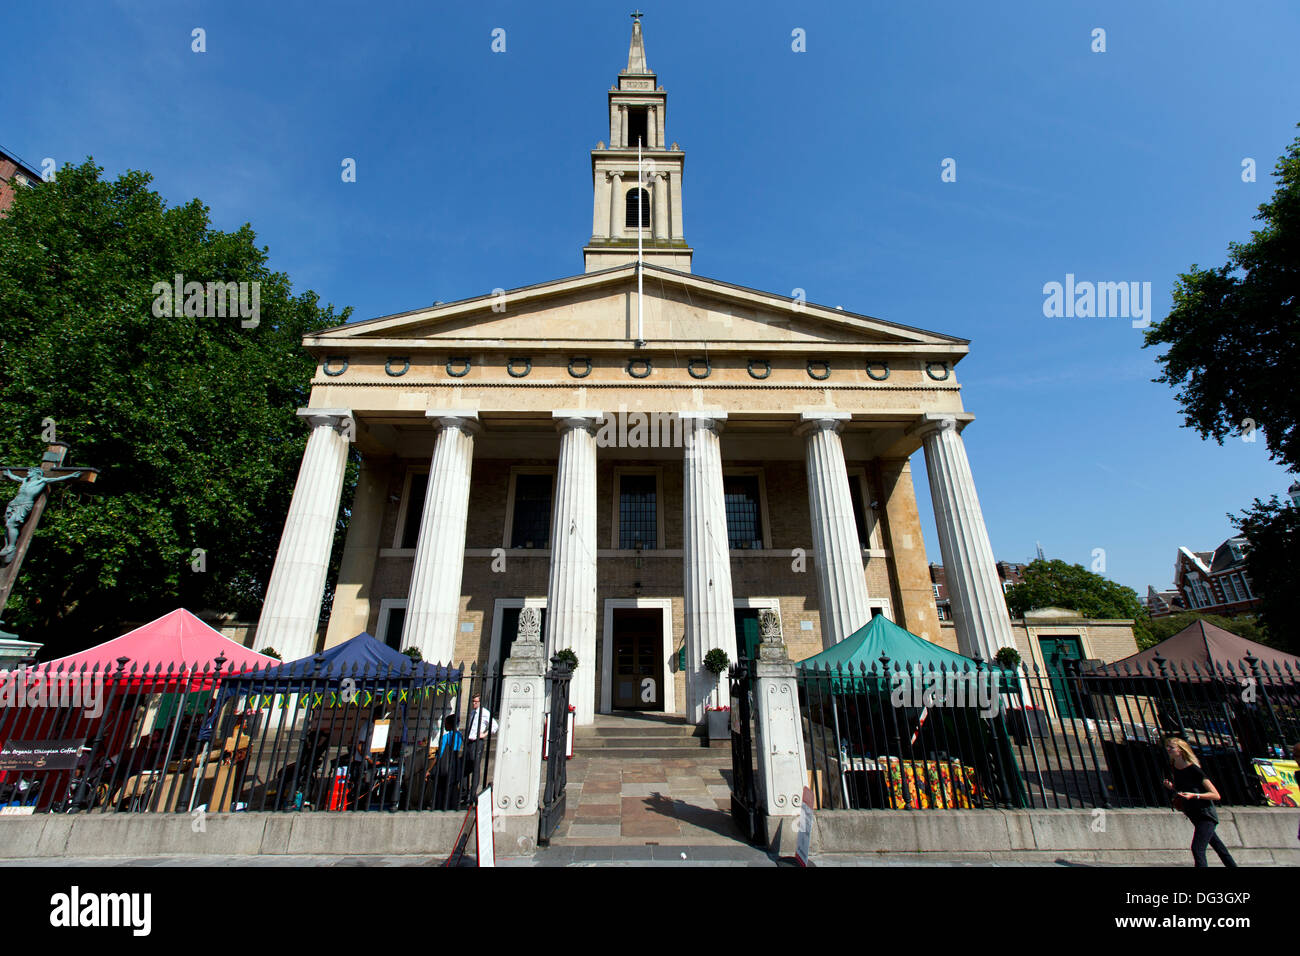 St John the Evangelist church, Waterloo, London, England, UK. Stock Photo